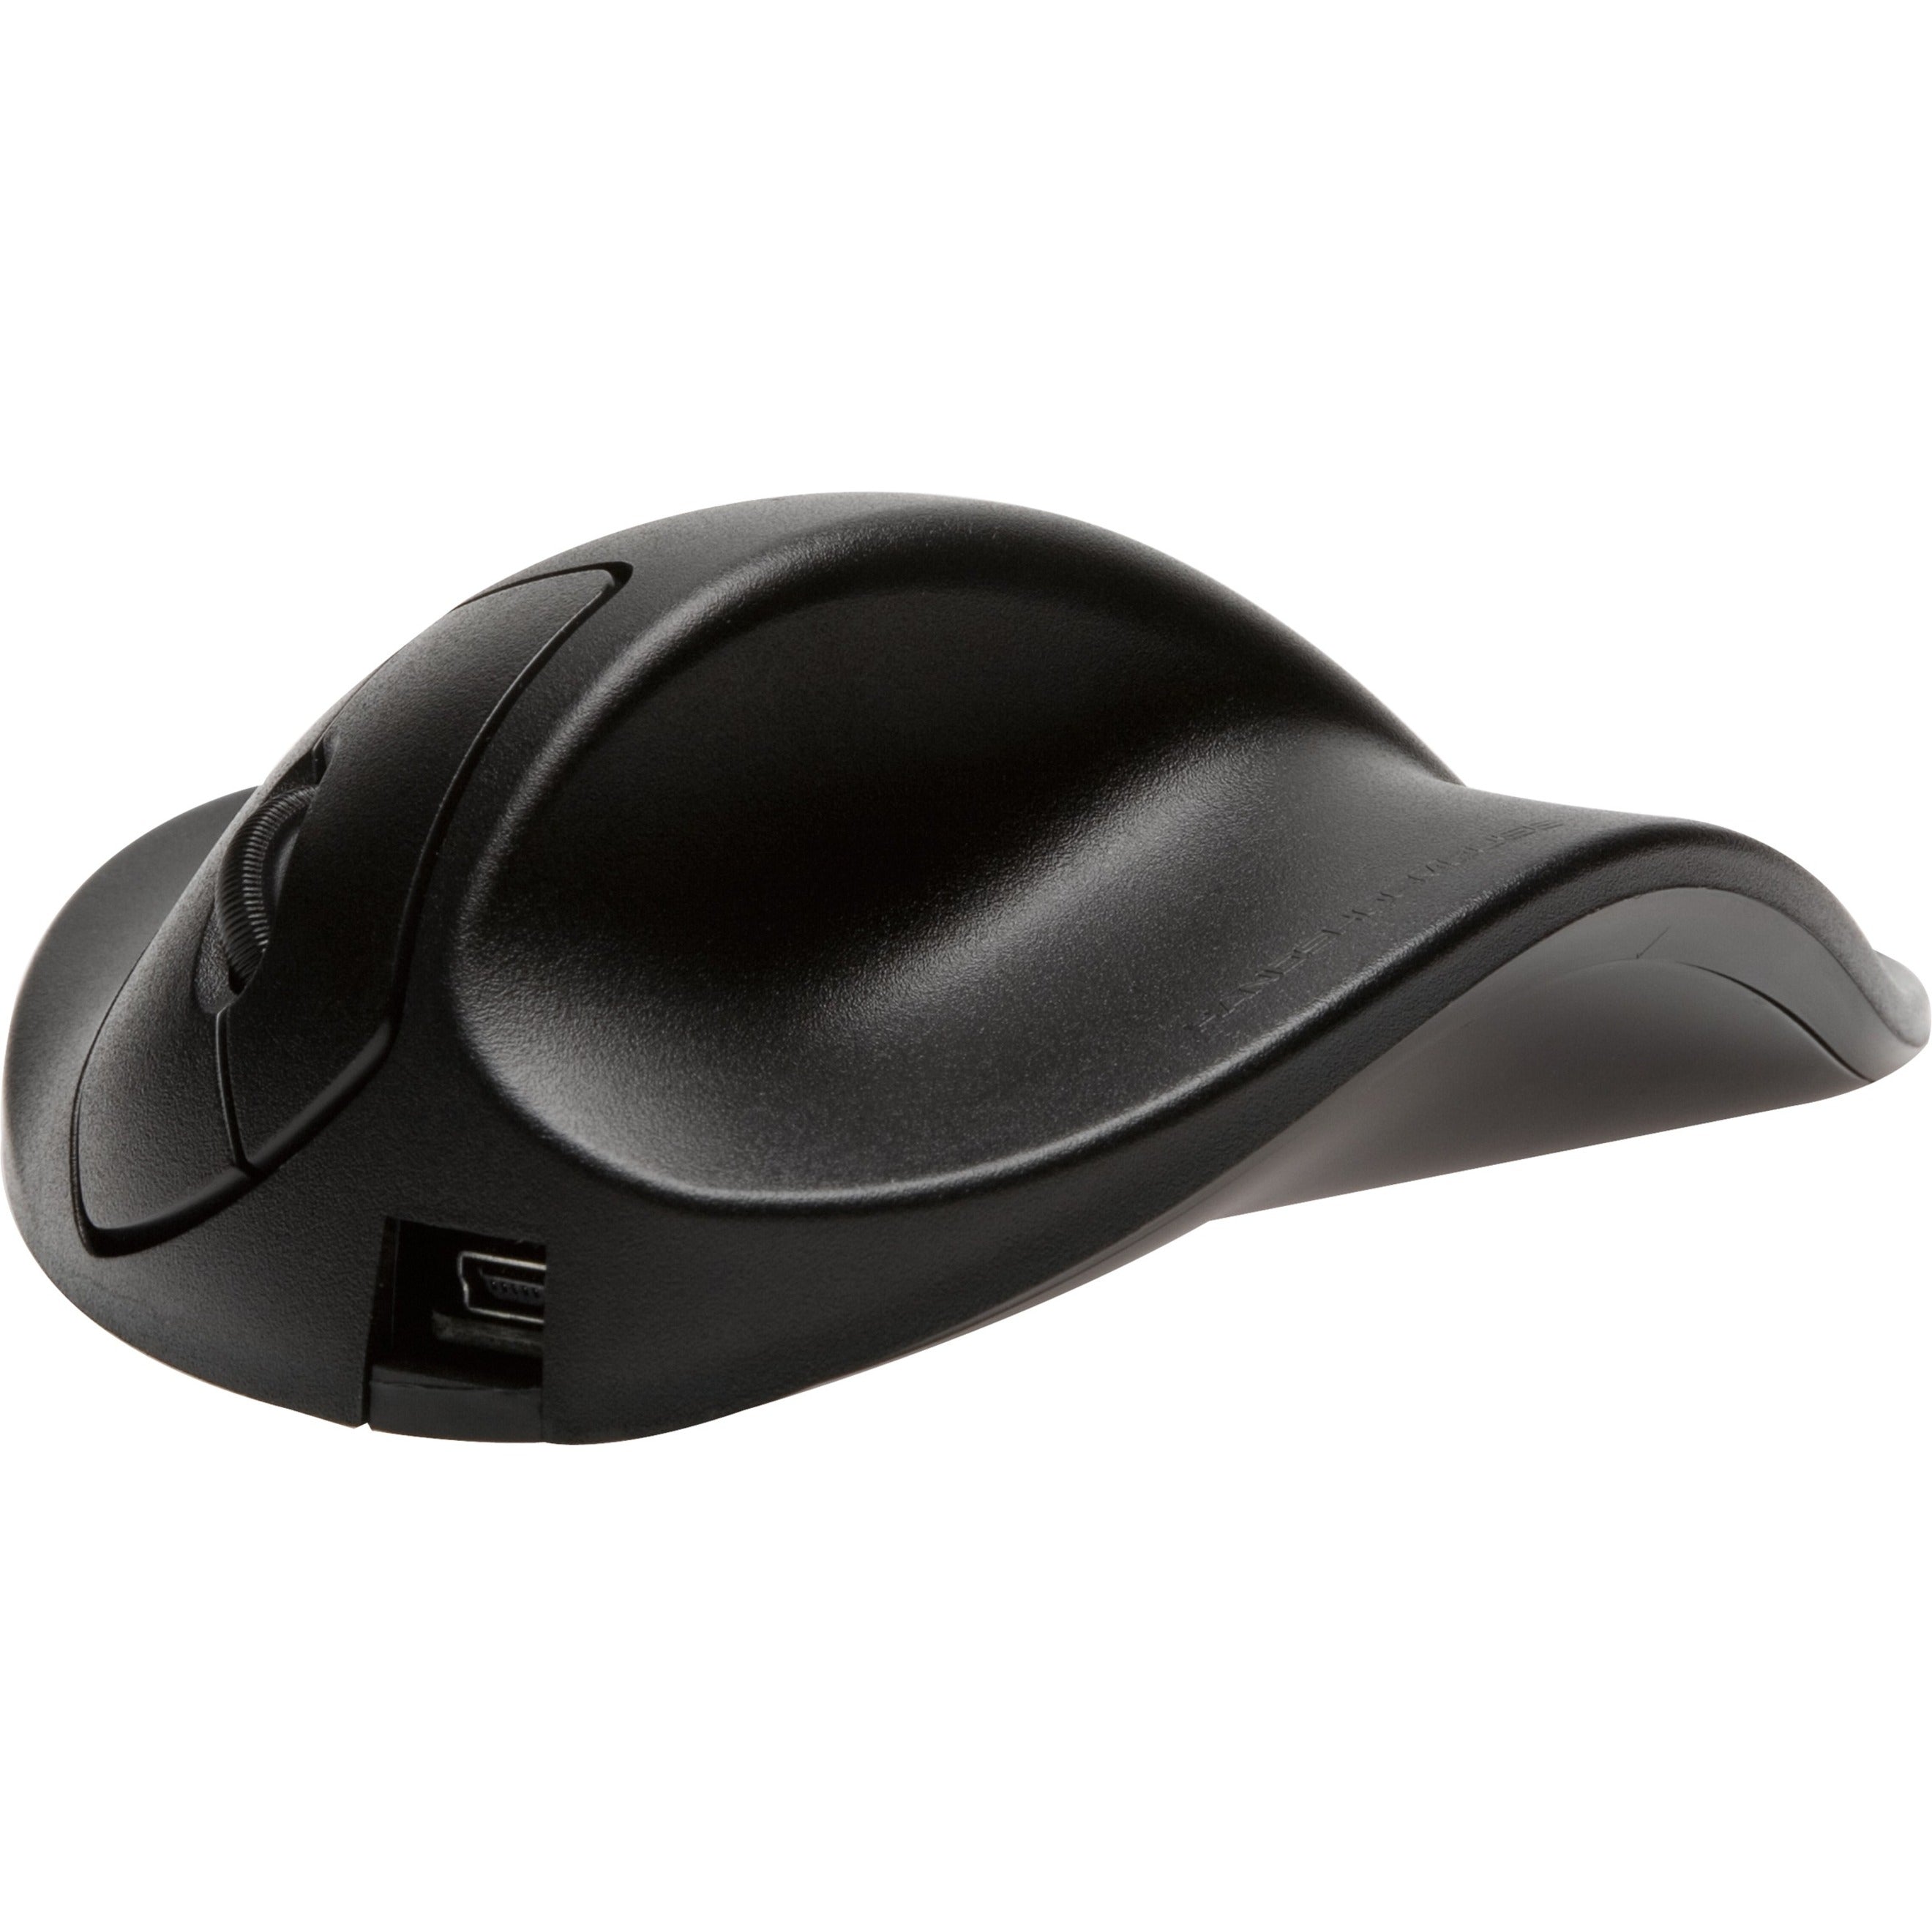 HandShoeMouse L2WB-LC Mouse, Ergonomic Fit, Optical Scroller, USB 2.0